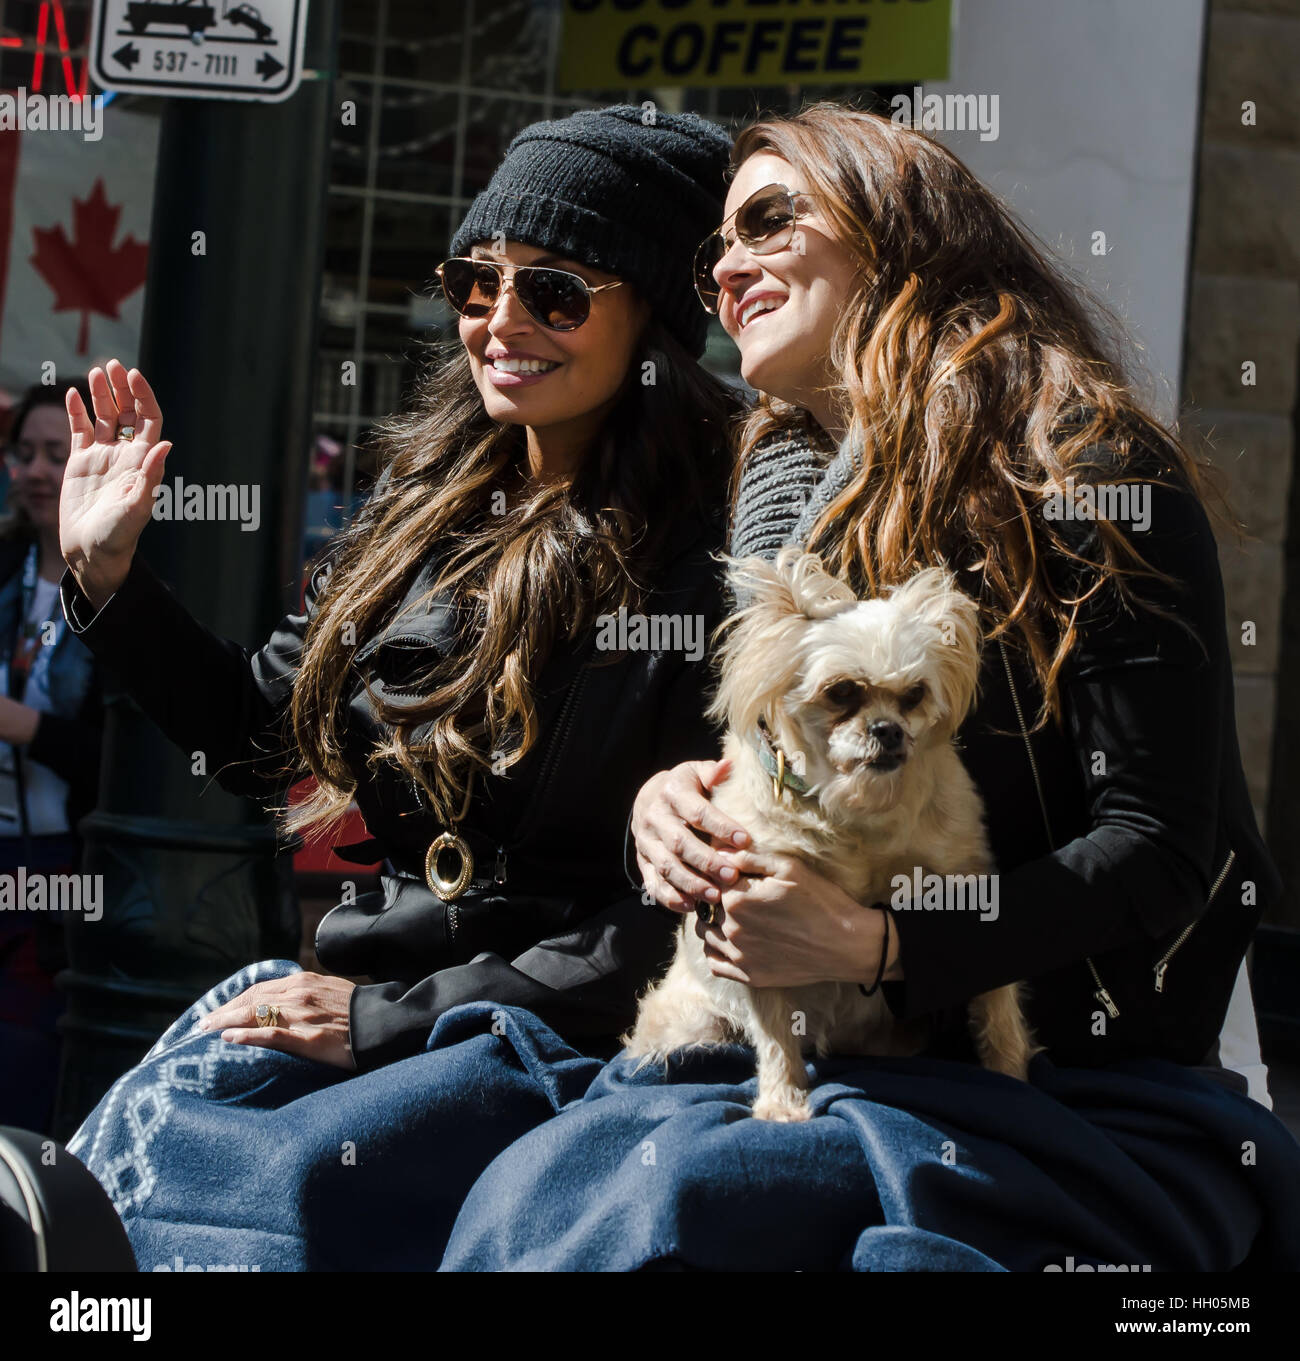 Calgary, Alberta, Kanada - 17. April 2015: Calgary Comic Expo Trish Stratus (links) und Amy "Lita" Dumas (rechts) der WWE Ruhm Stockfoto